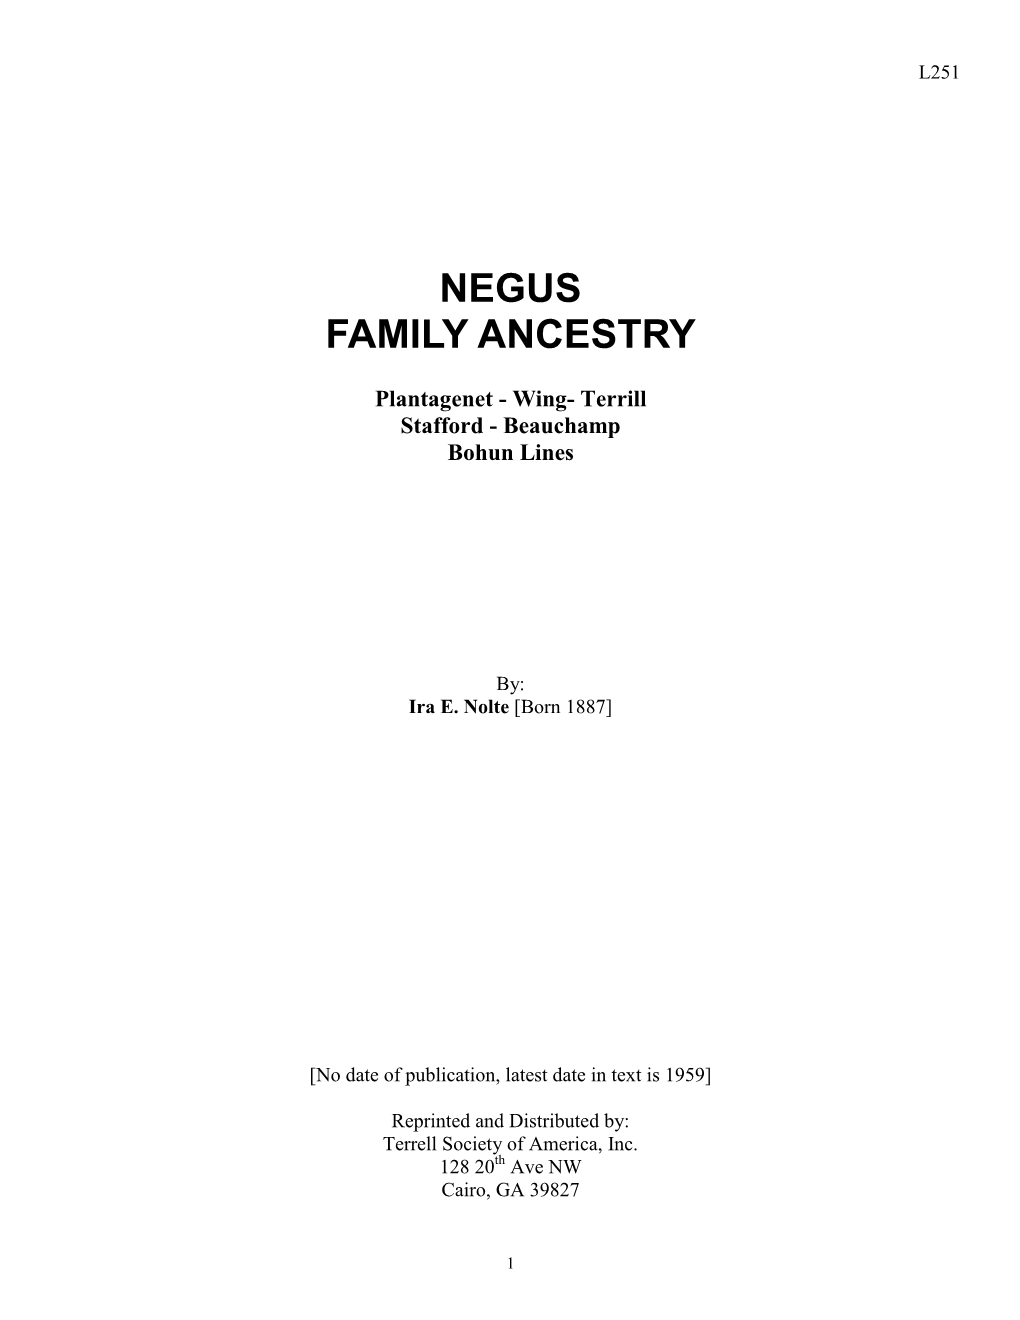 Negus Family Ancestry